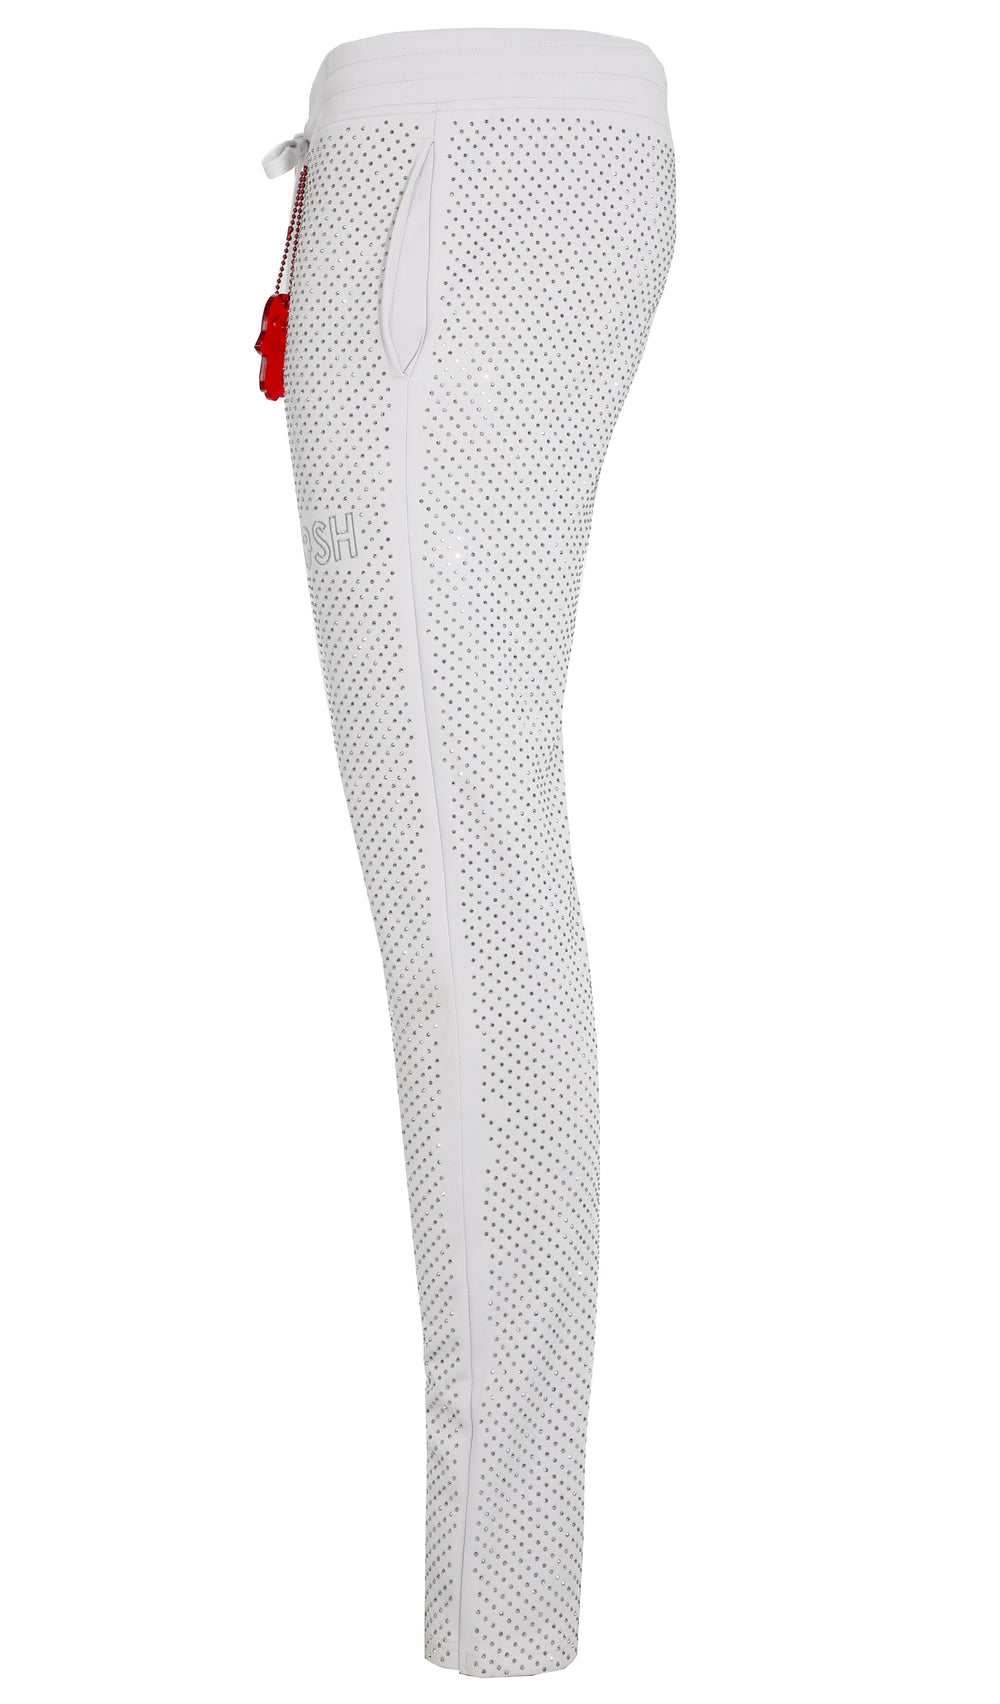 Kash Crystal Track Pants with Hamsa Logo Side Stripes detail Color: Light Grey Wrinkle Free Material Fits true to size